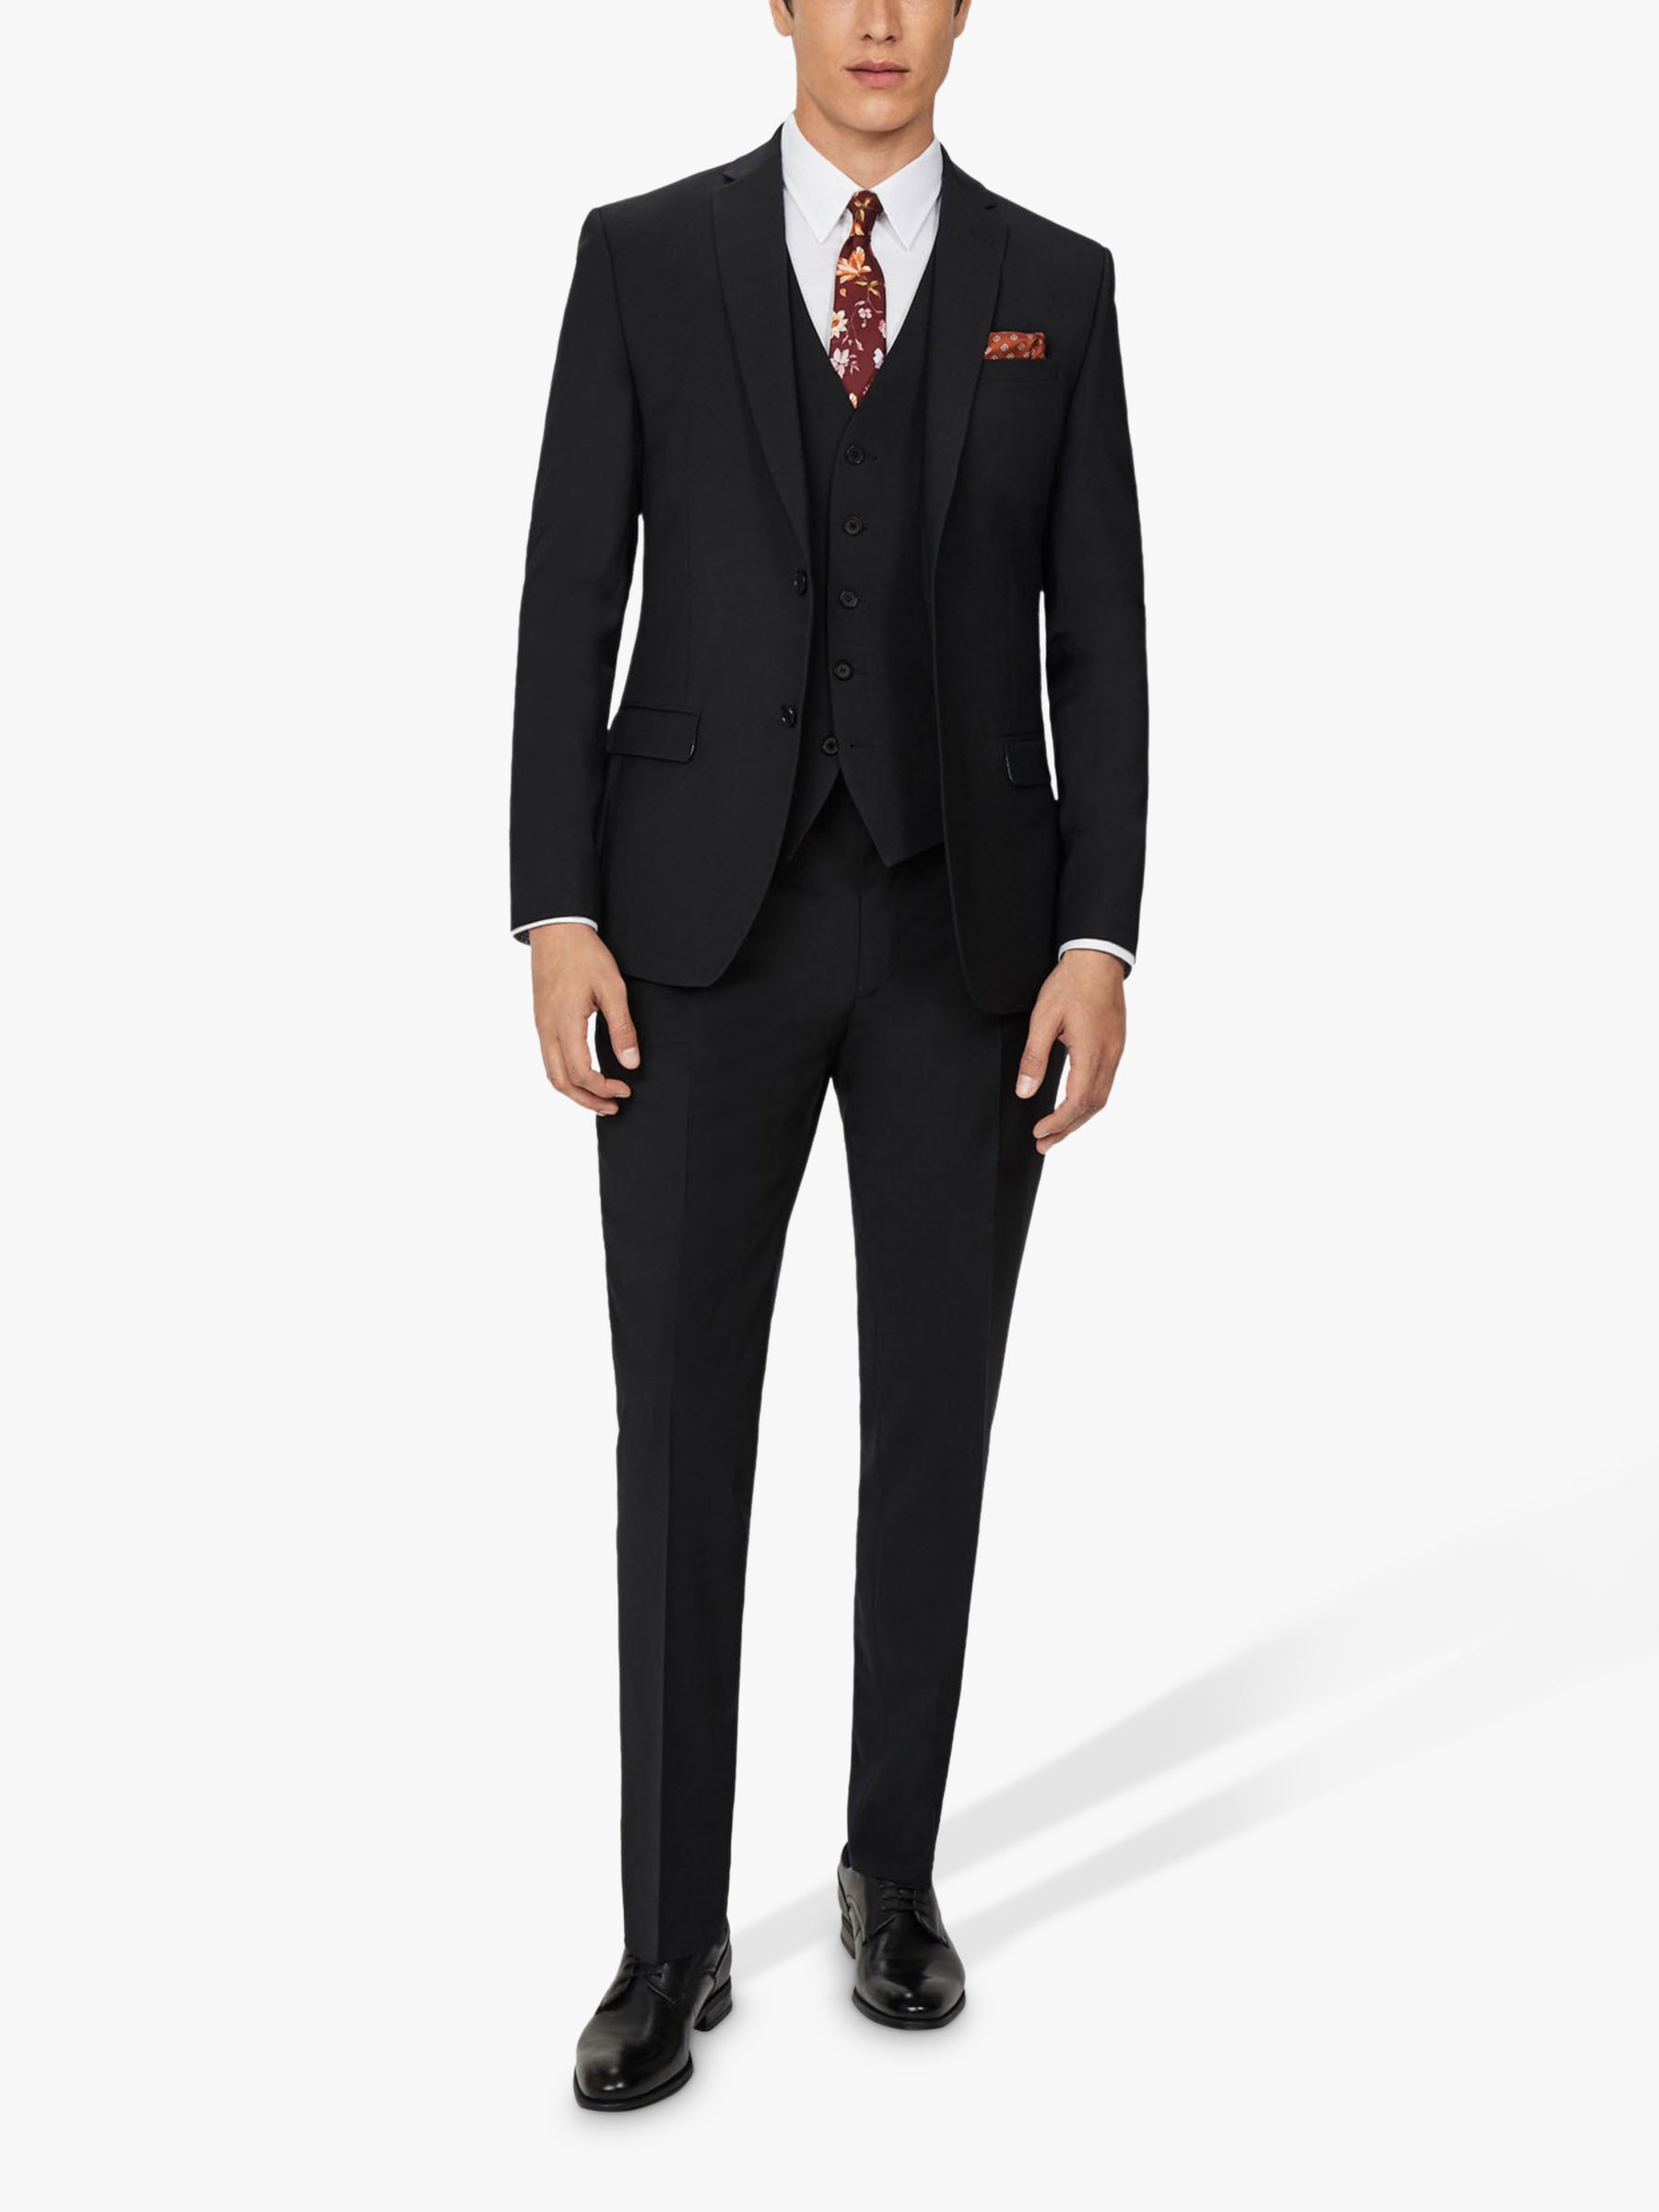 Ted Baker Panama Wool Blend Suit Trousers, Black at John Lewis & Partners